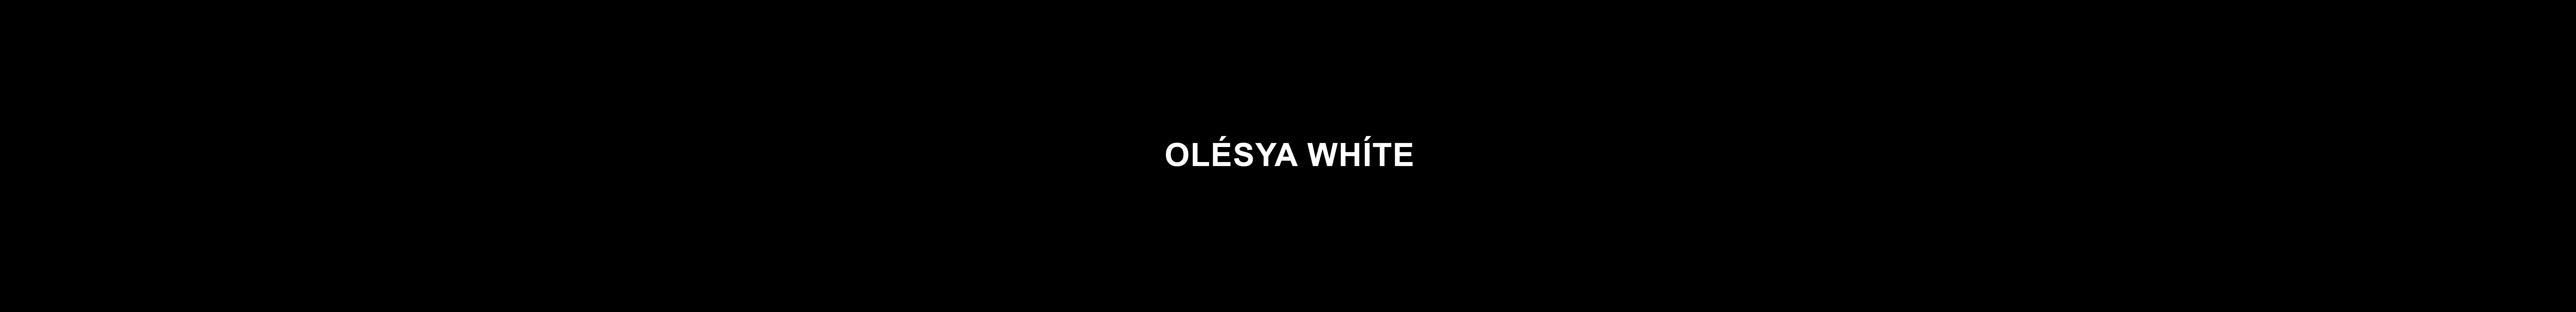 Olesya White 的个人资料横幅